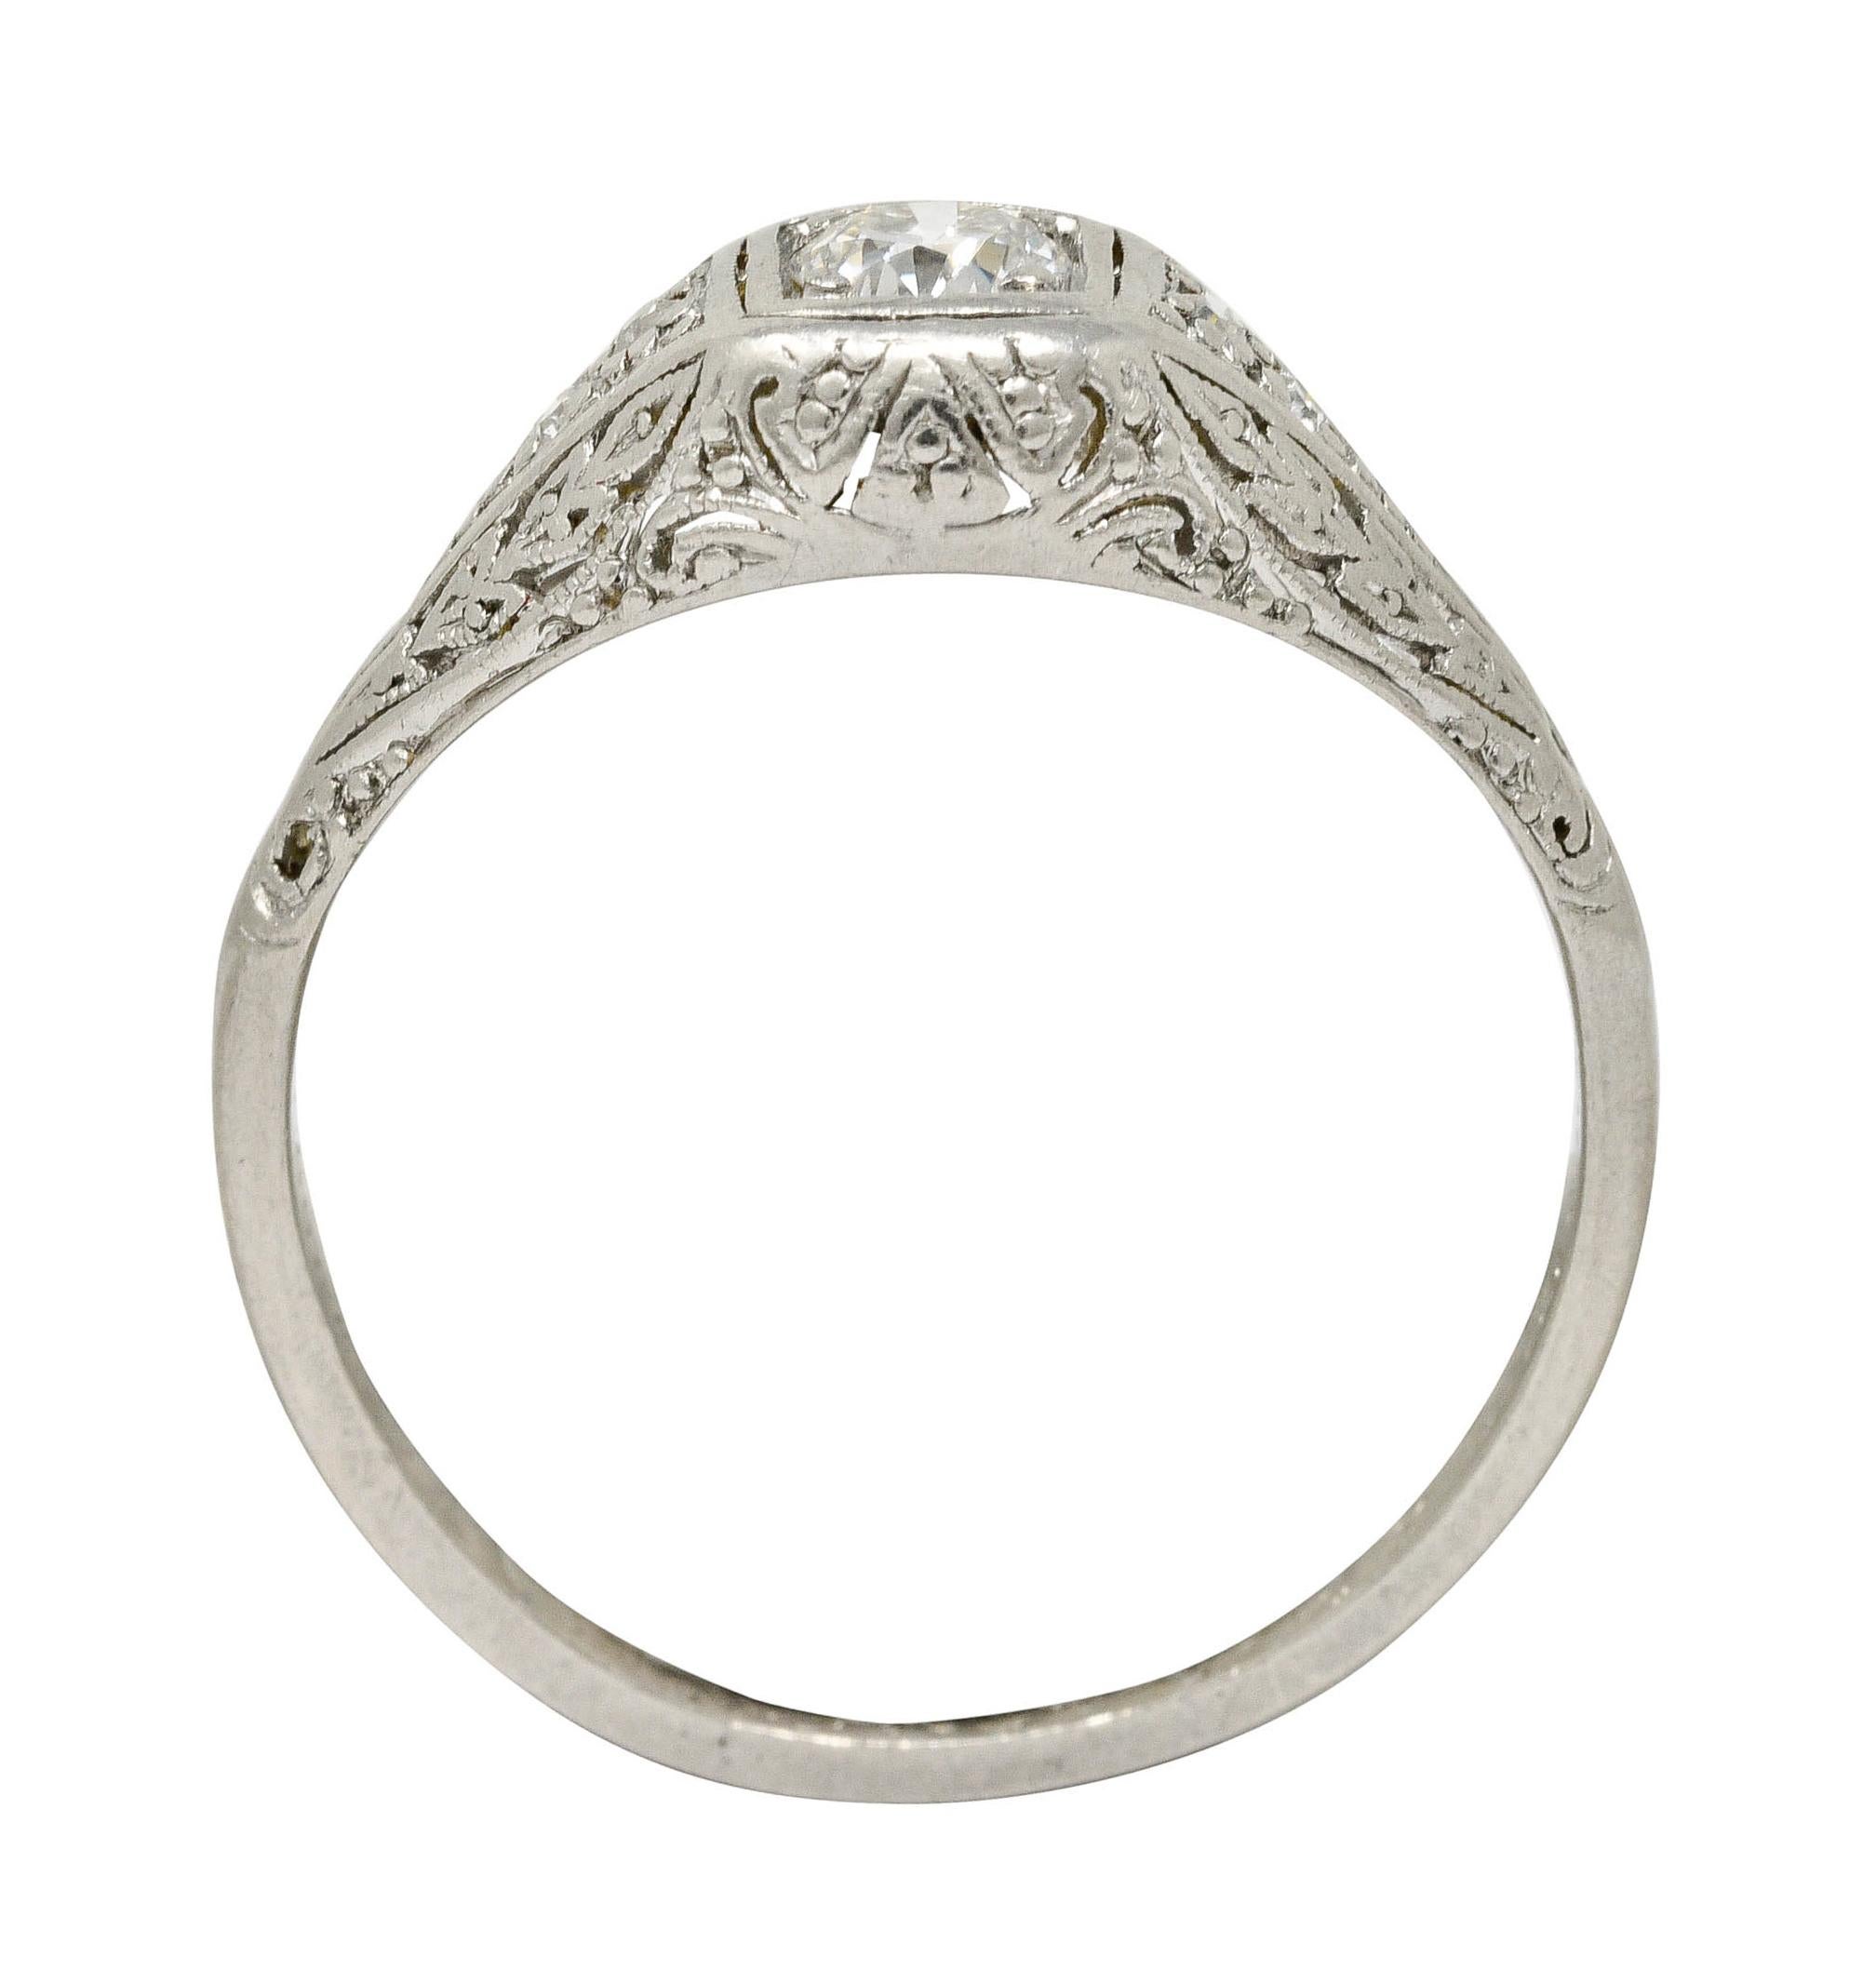 1925 Early Art Deco Old European Cut Diamond Platinum Foliate Engagement Ring 4